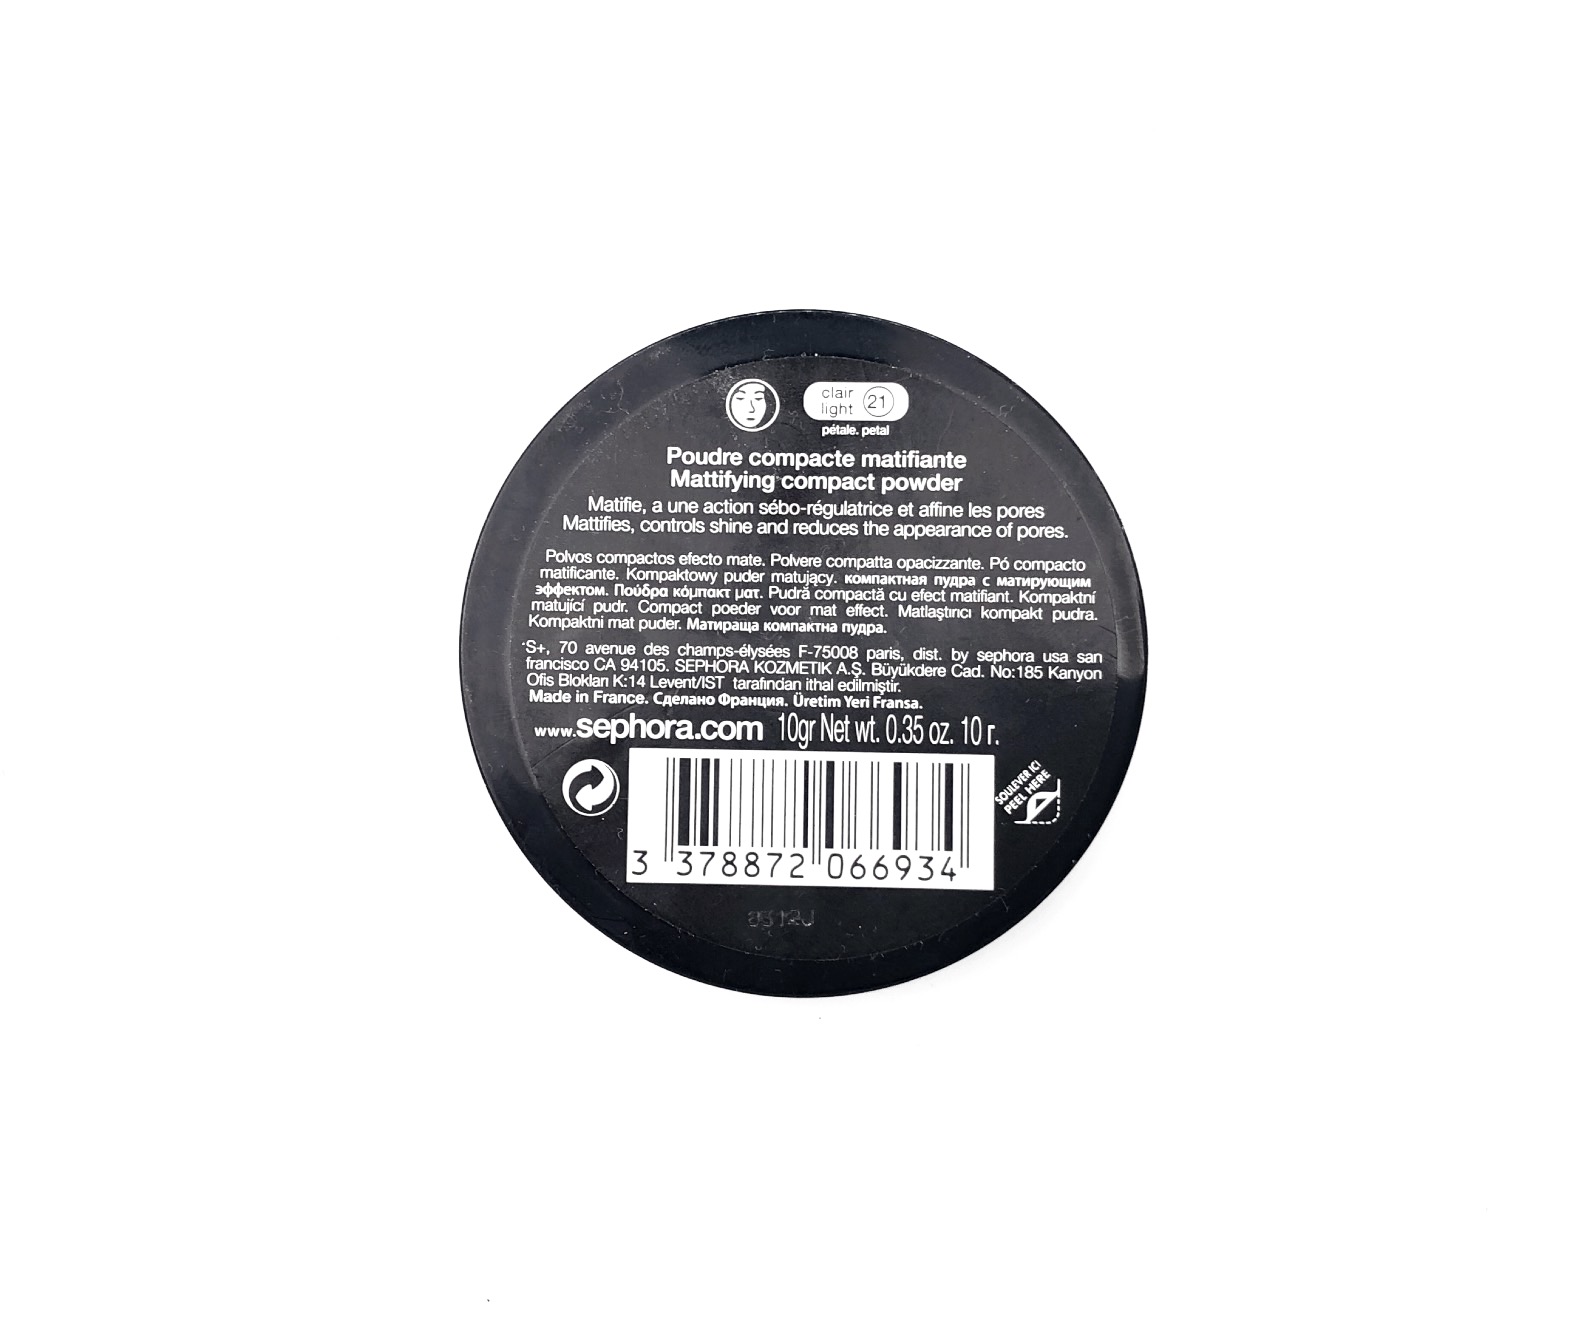 Review Sephora Mattifying Compact Powder 4